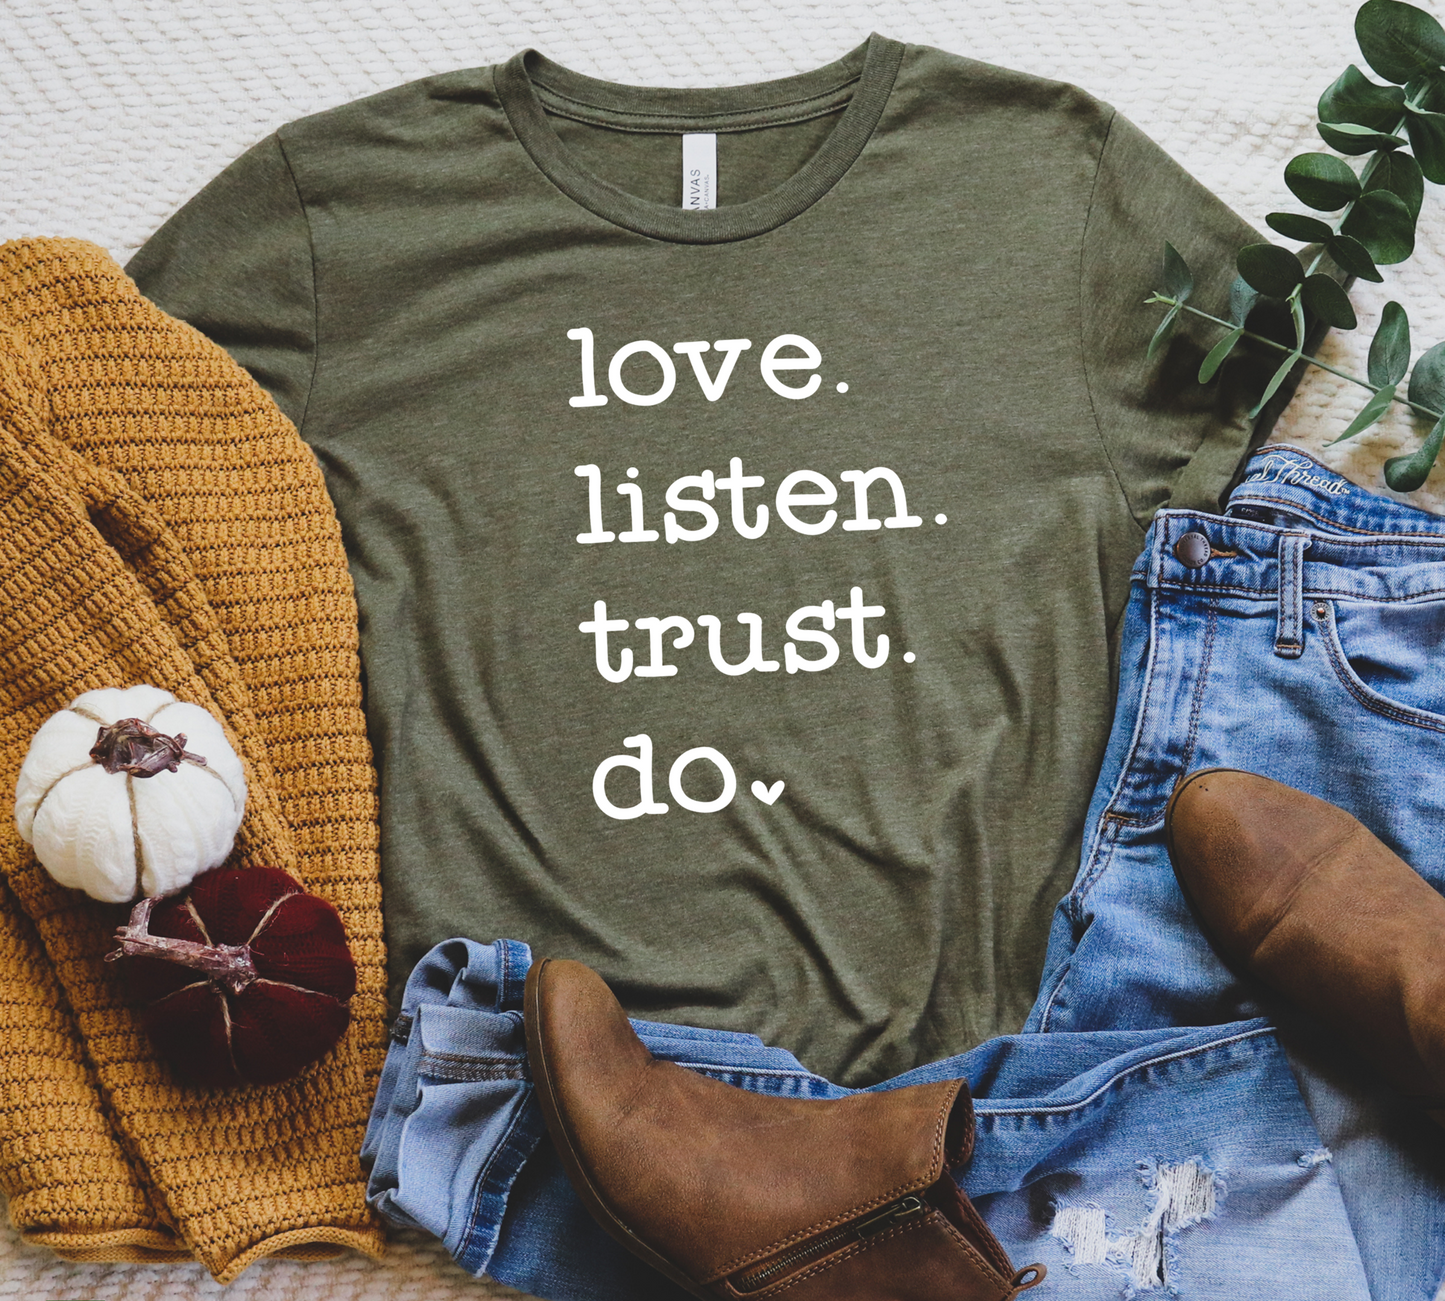 Love. listen. trust. do